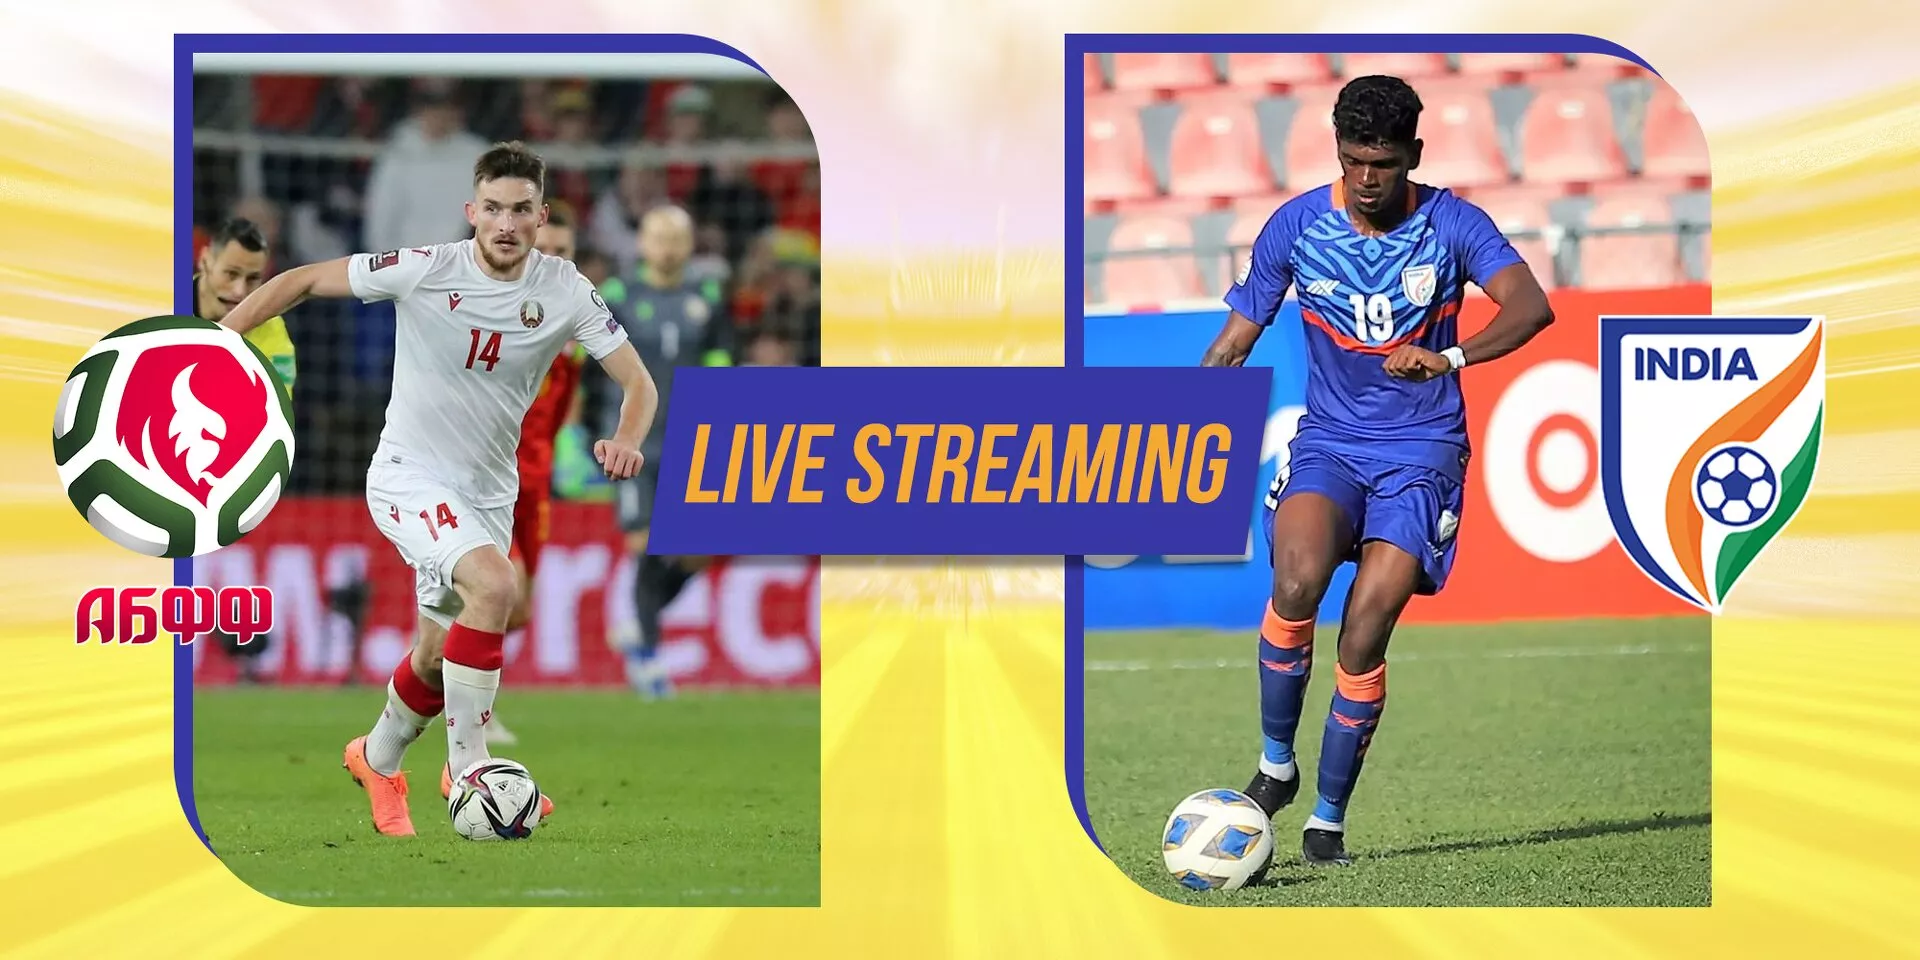 Belarus vs India Live Streaming